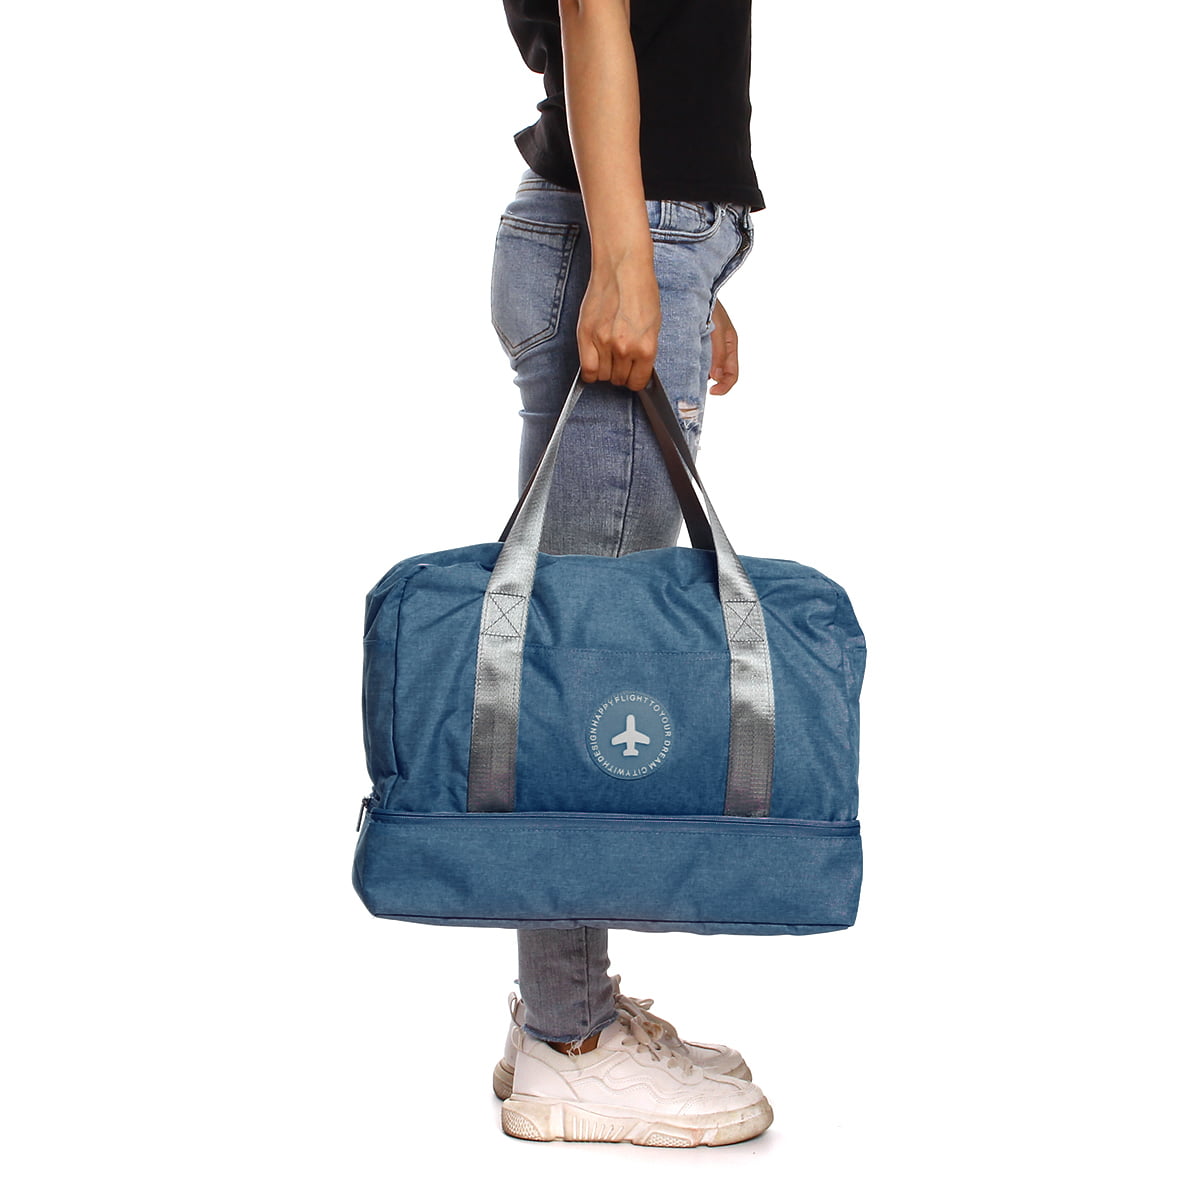 Waterproof Travel Sports Gym Duffel Bag Dry Wet Separation Swimming Handbag